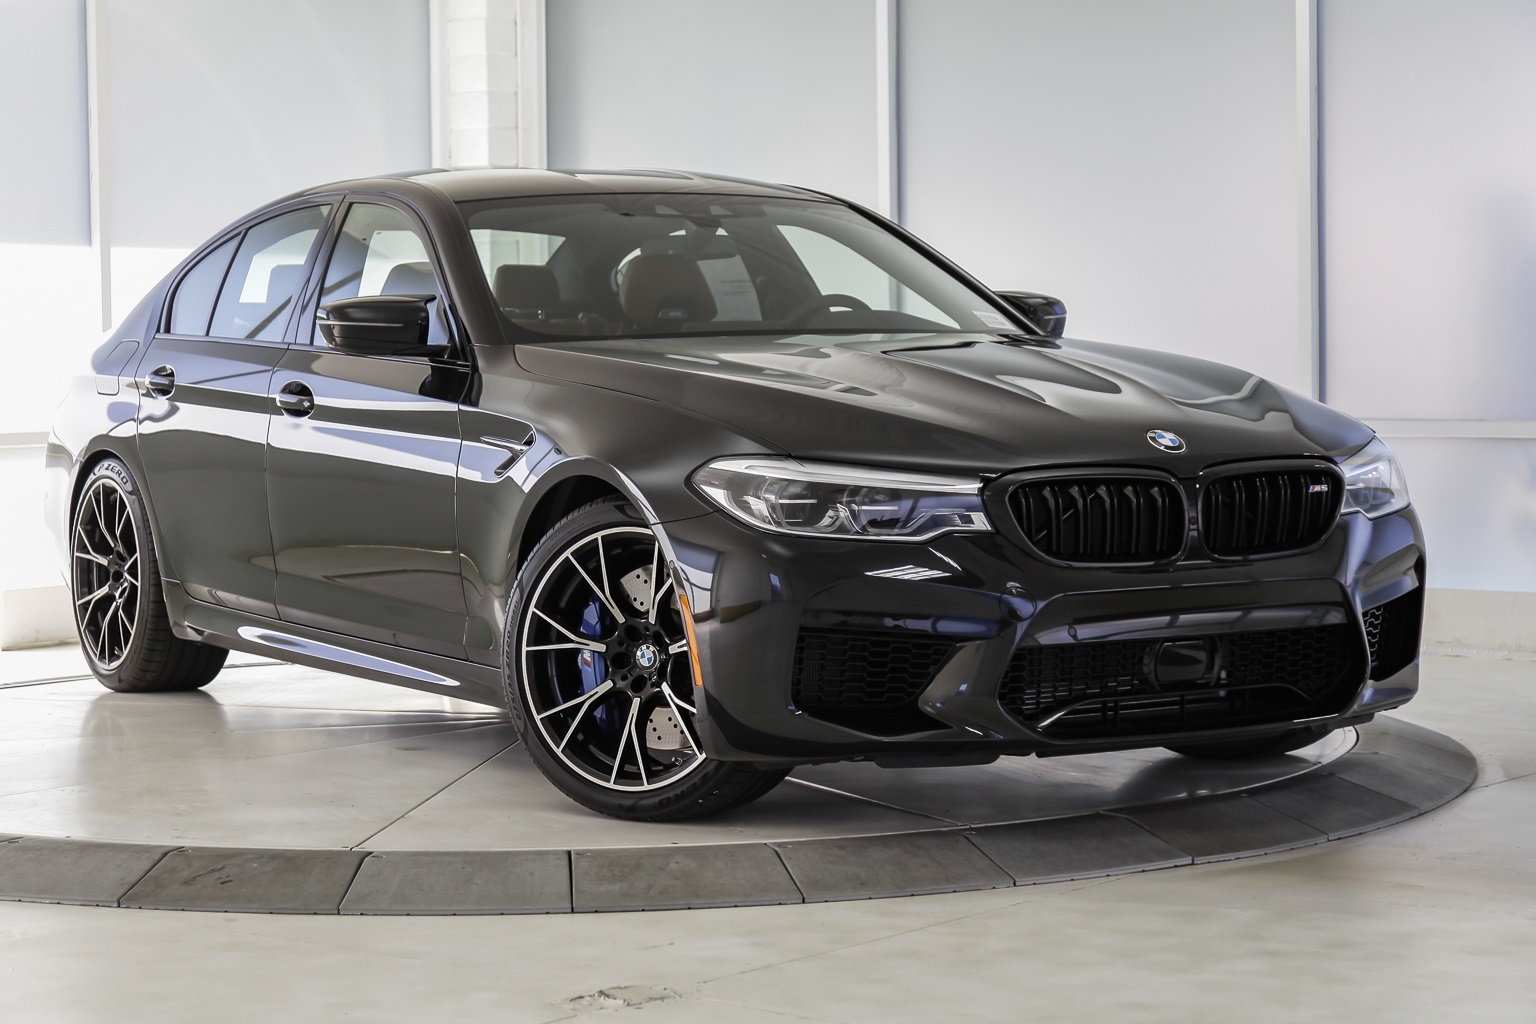 New 2020 BMW M5 Base 4D Sedan in Thousand Oaks #24200554 | Rusnak BMW